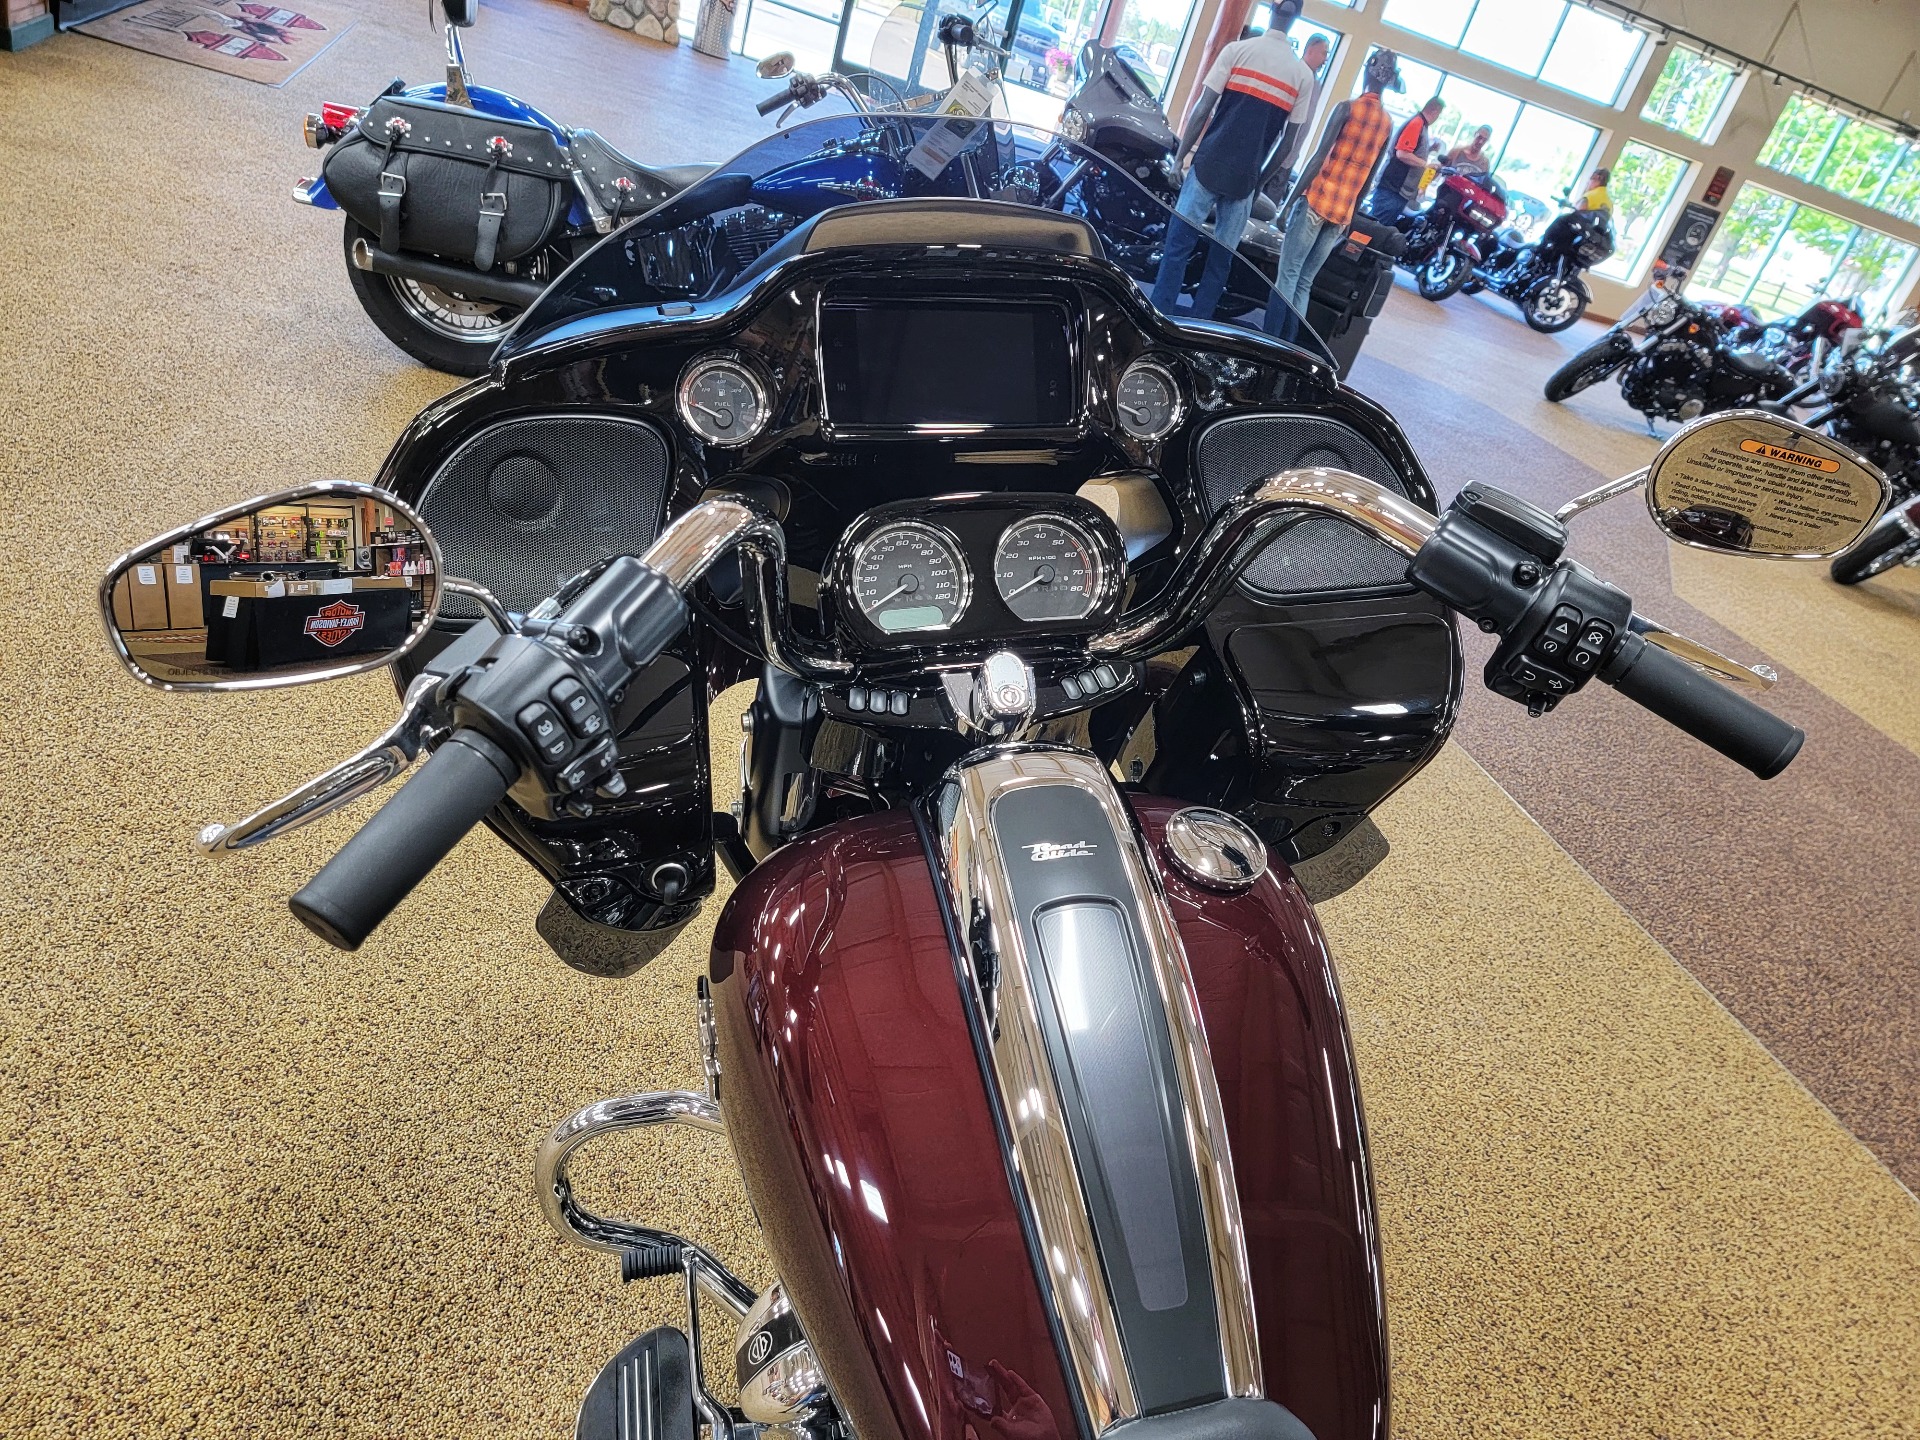 New 2021 Harley Davidson Road Glide Special Midnight Crimson Chrome Option Motorcycles In Sauk Rapids Mn Fl602191